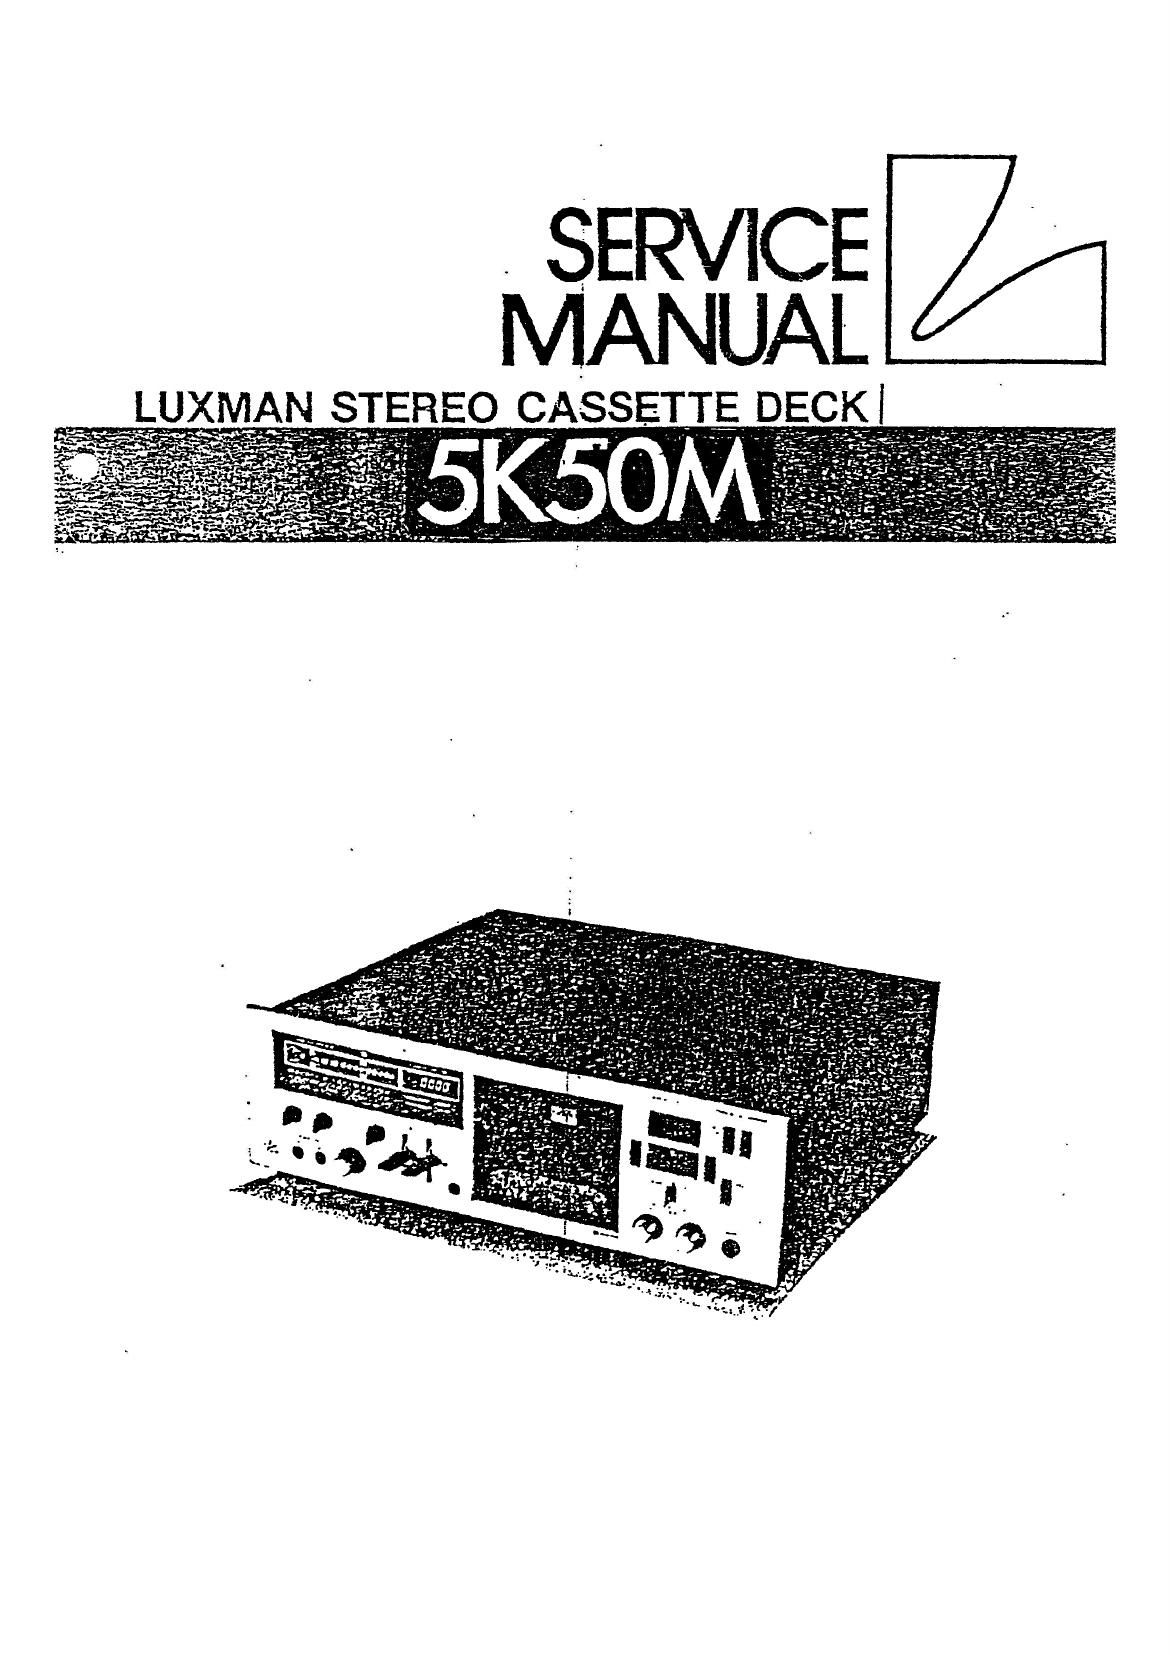 Luxman 5 k 50M Service Manual